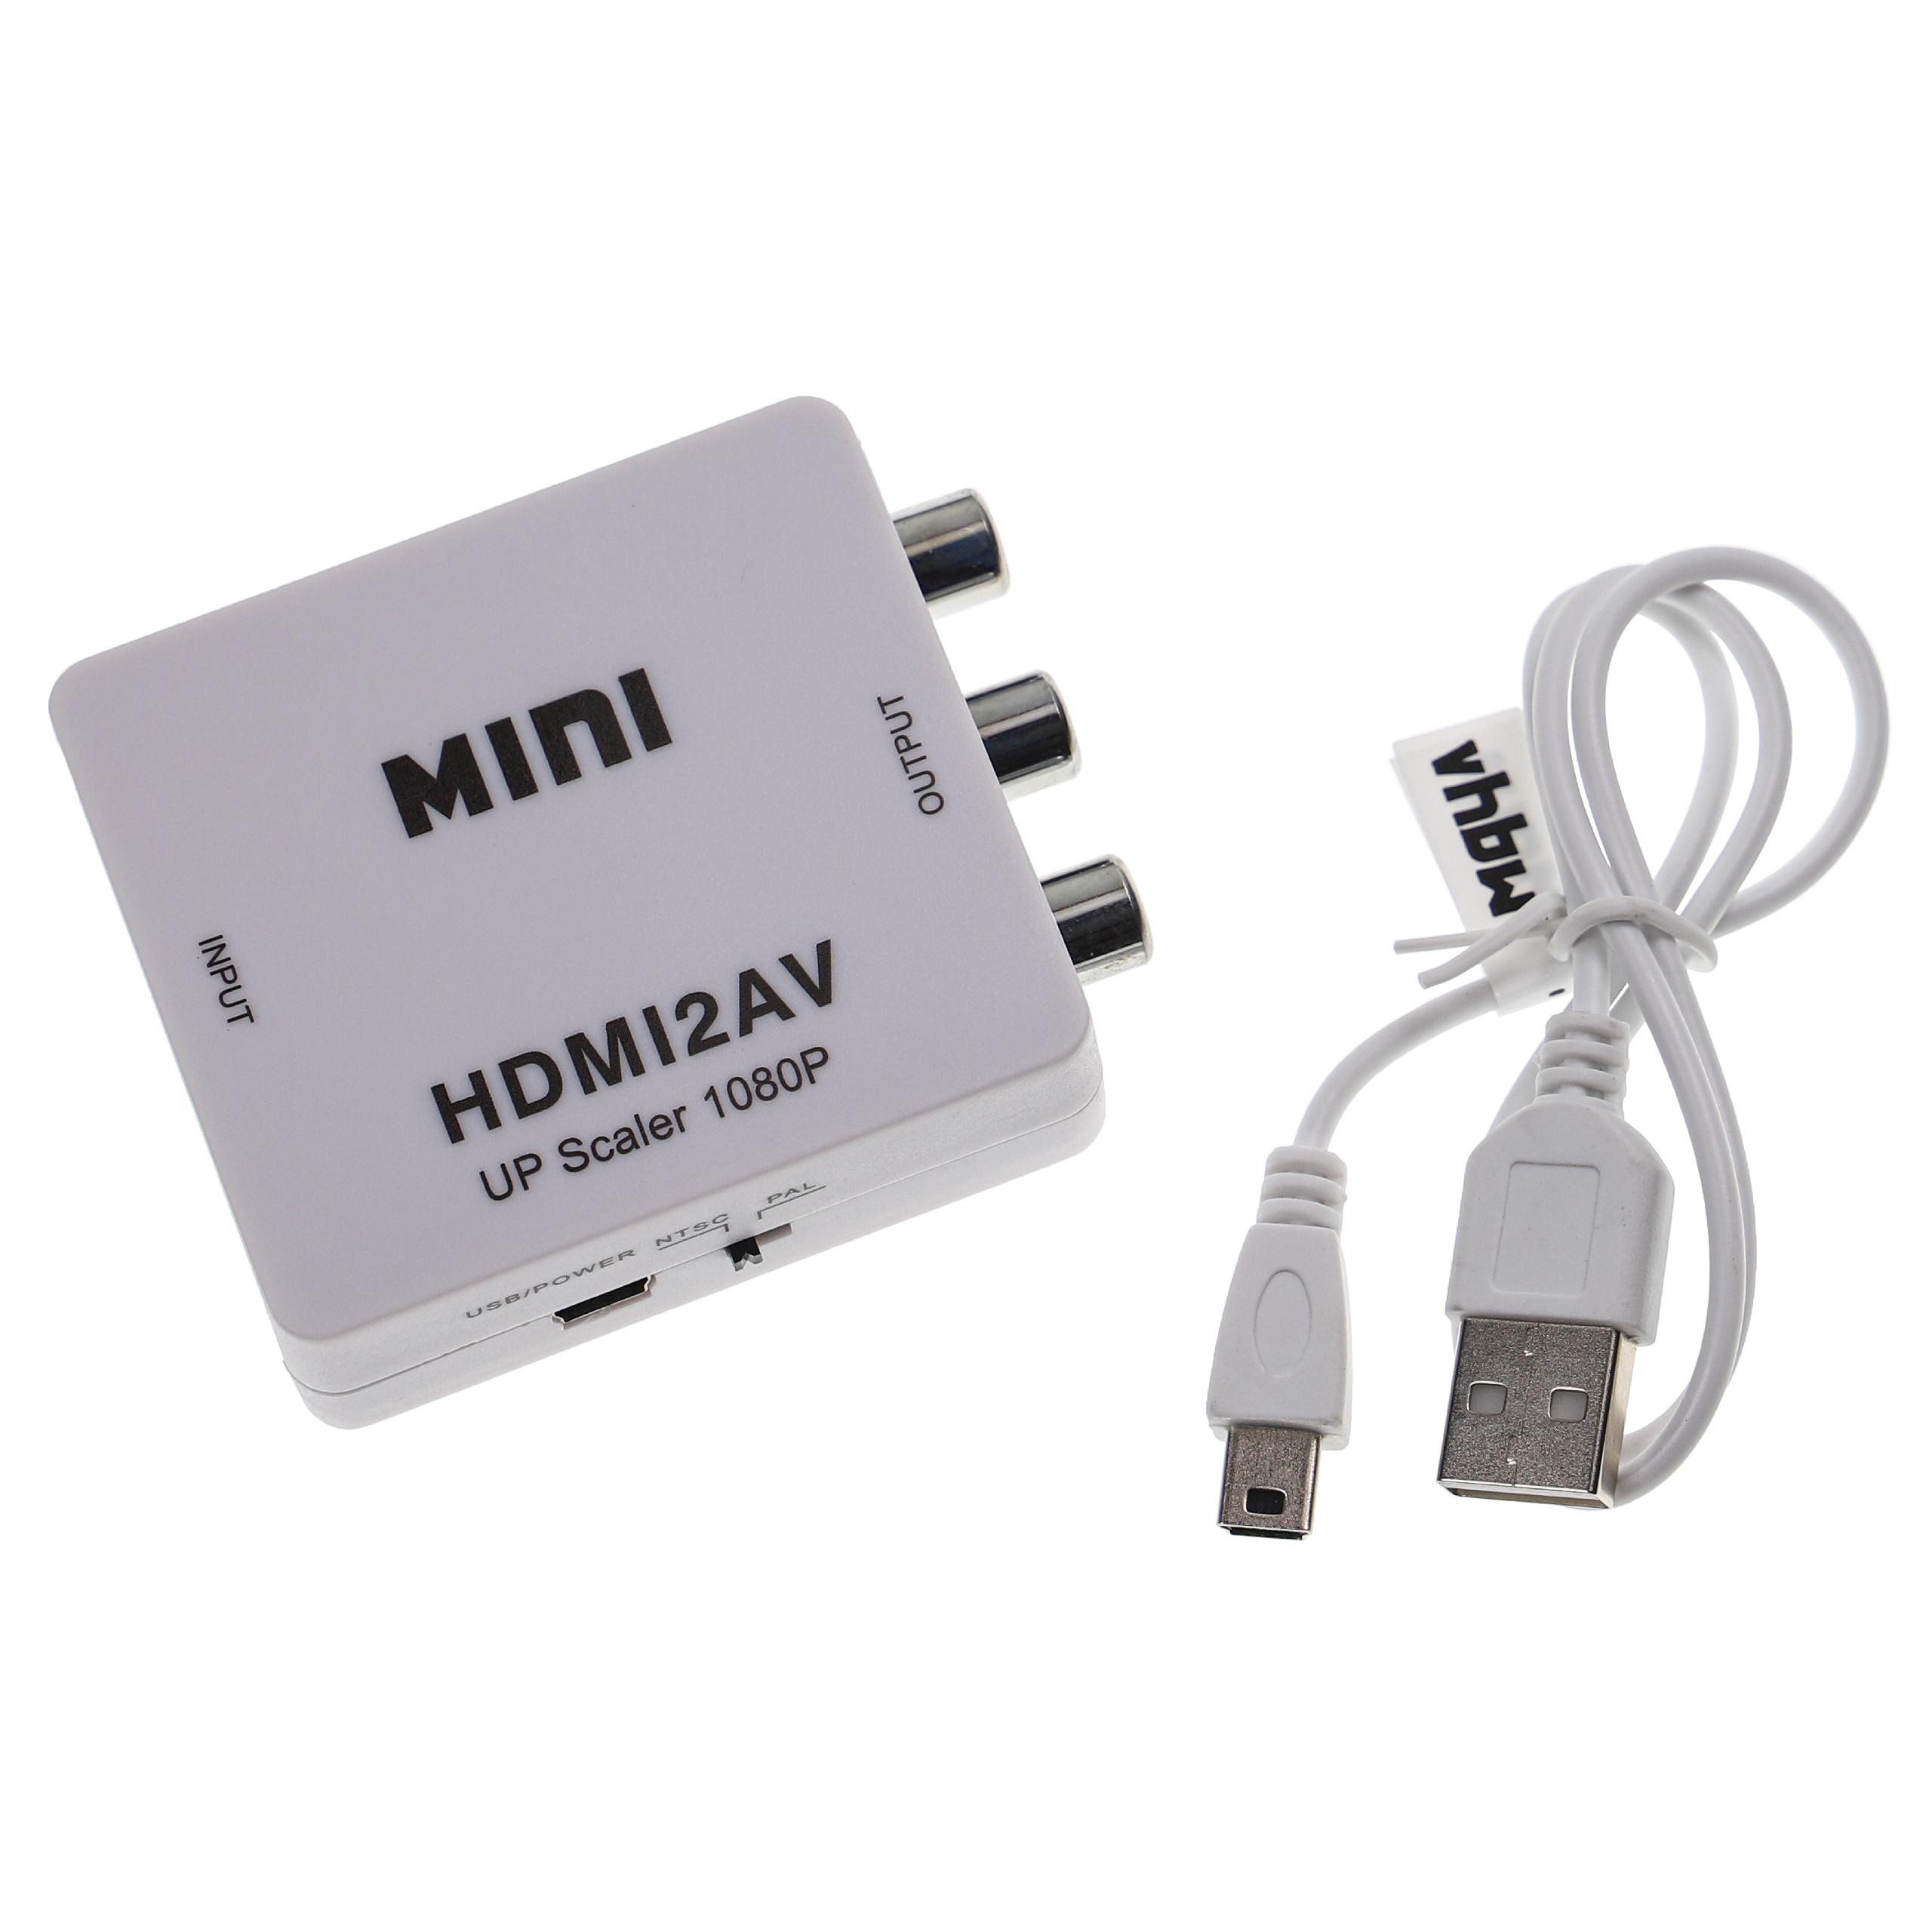 HDMI vers RCA avec audio - Vidéo 1080p - Convertisseurs de signal vidéo